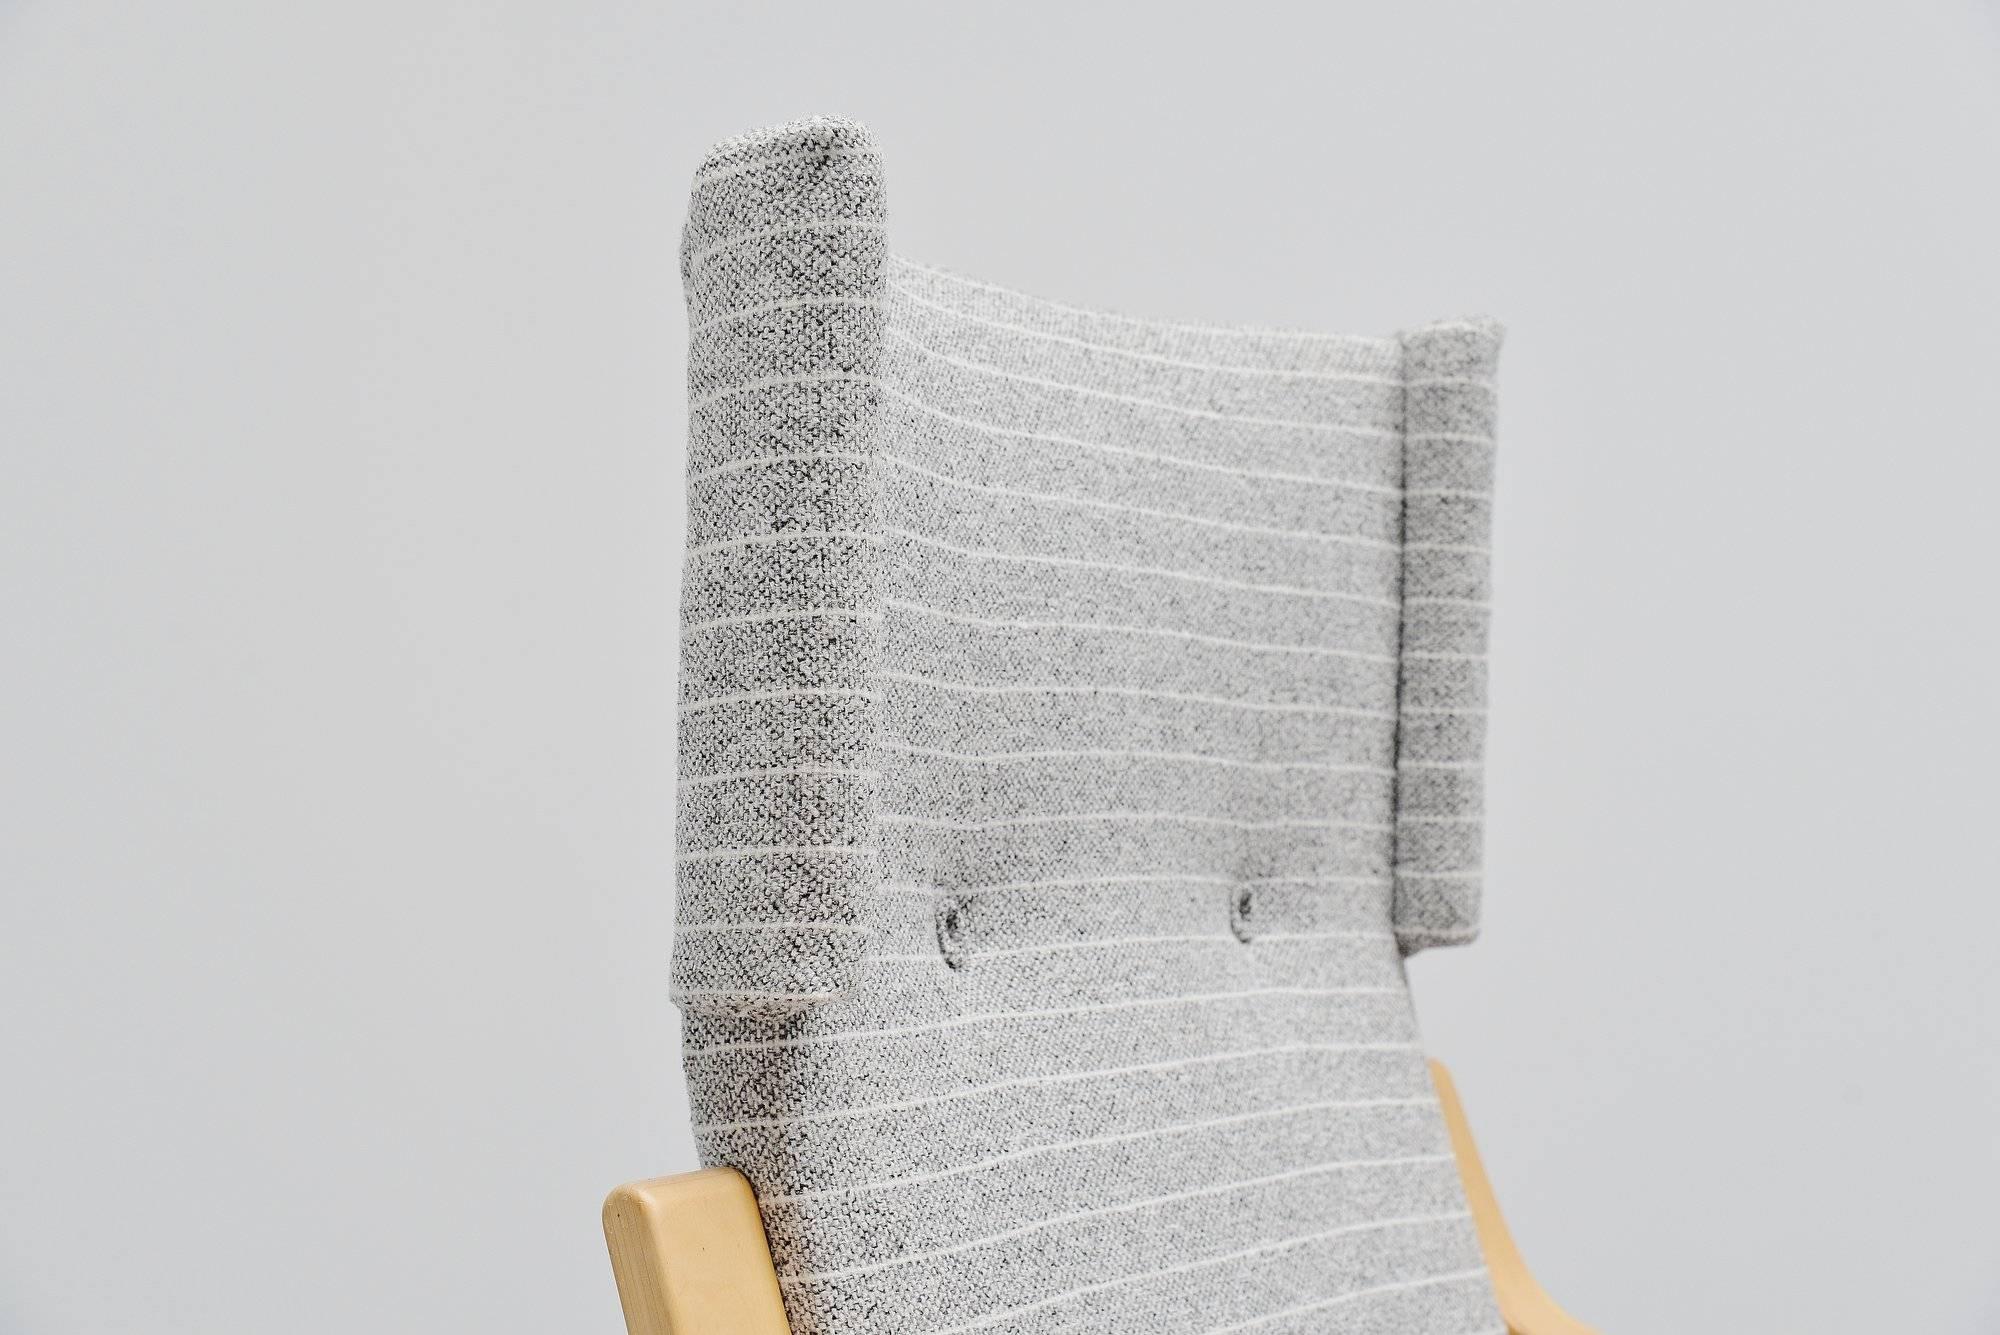 Upholstery Alvar Aalto 401 Wingback Chairs Artek, Finland, 1970